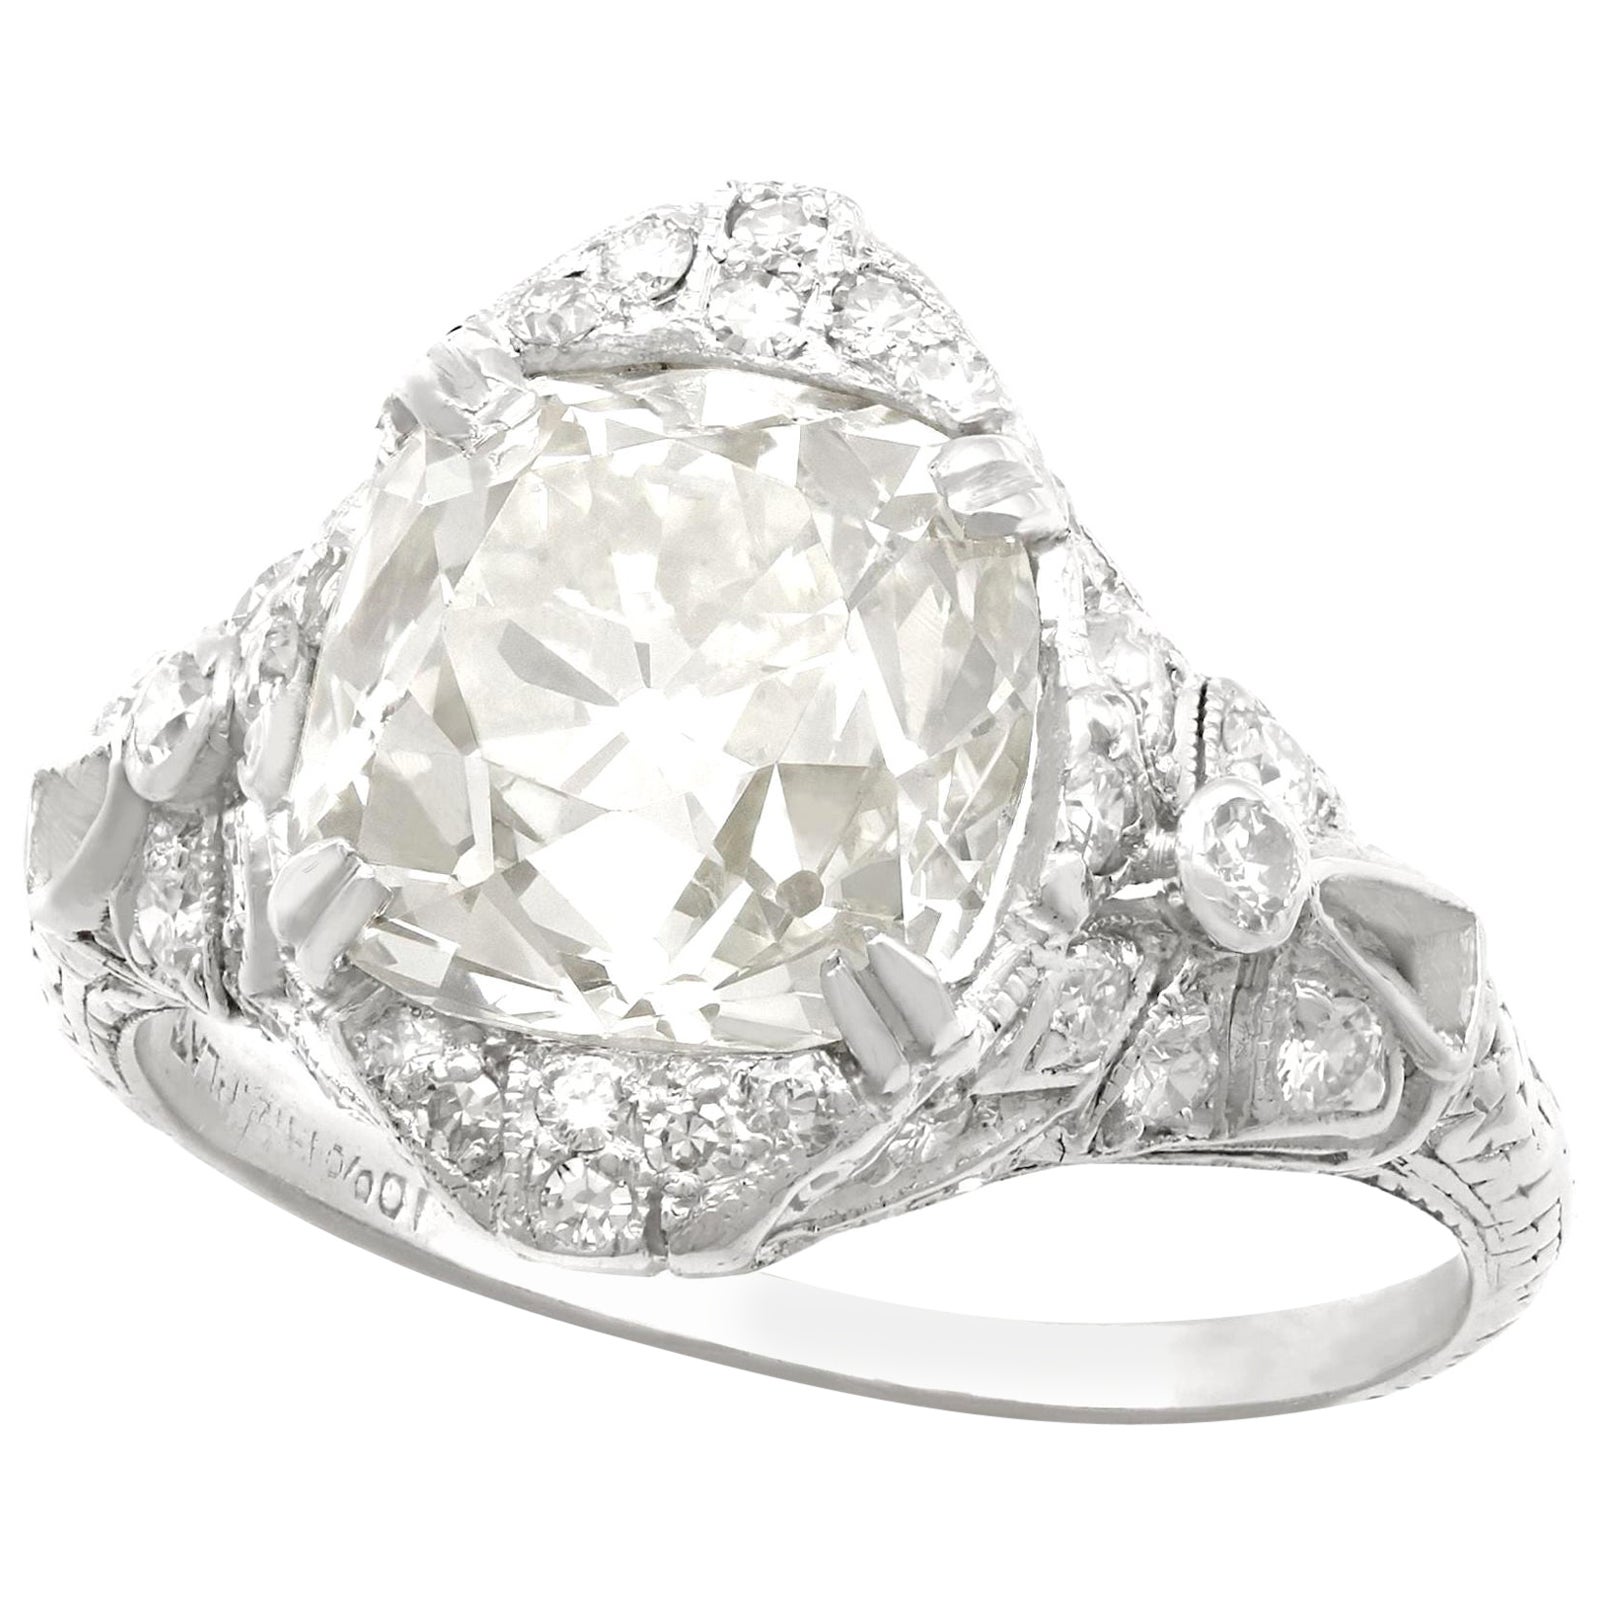 Antique Art Deco 5.39 Carat Diamond and Platinum Cocktail Ring For Sale